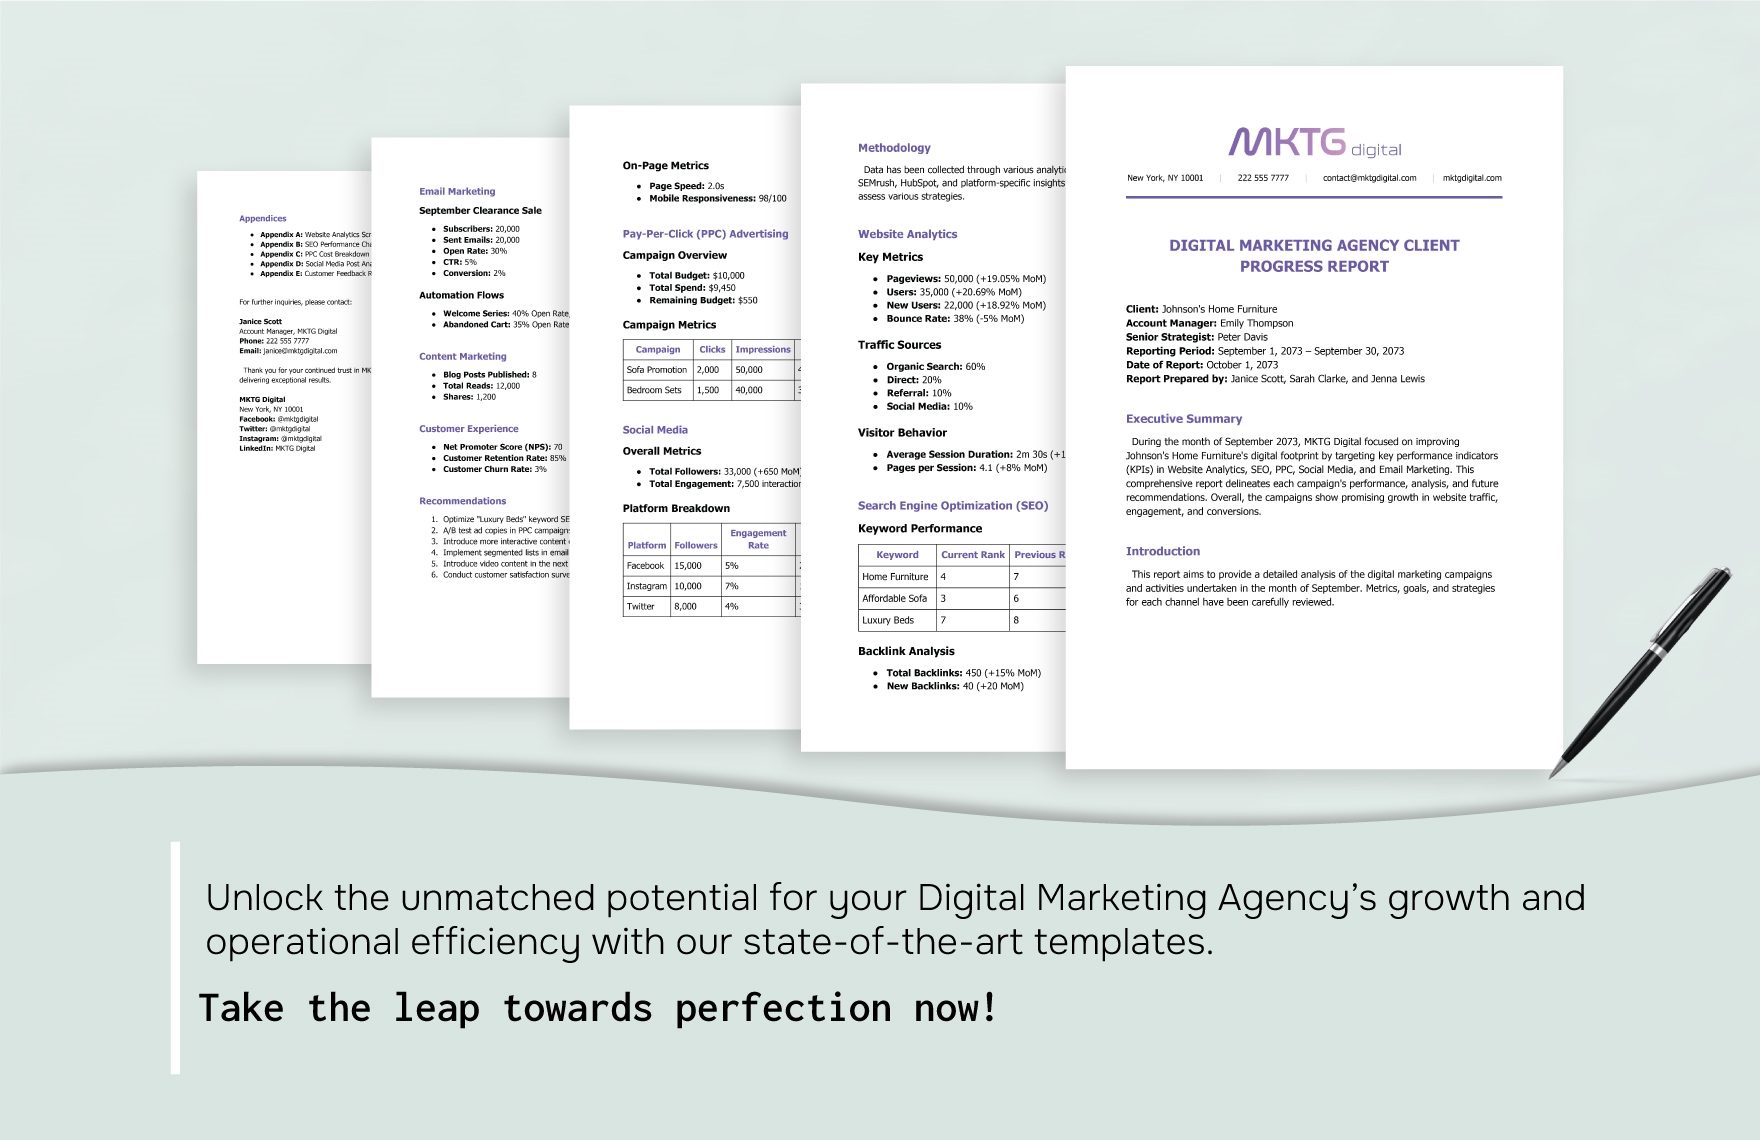 Digital Marketing Agency Client Progress Report Template